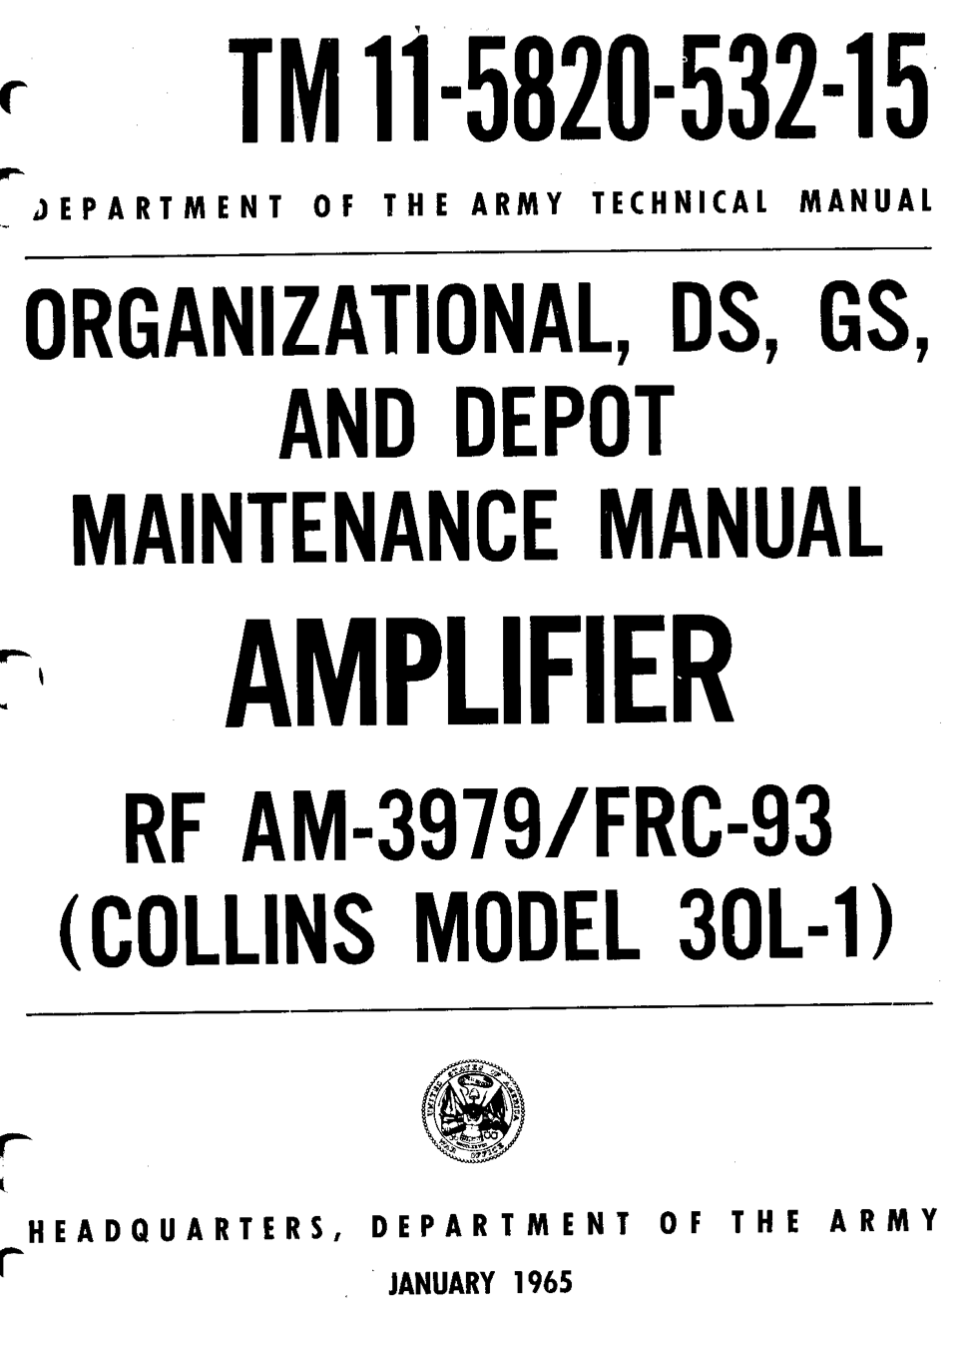 Collins 30L-1 - RF Linear Amplifier - Army Maintenance Manual TM 11-5820-532-15 (1965-01)